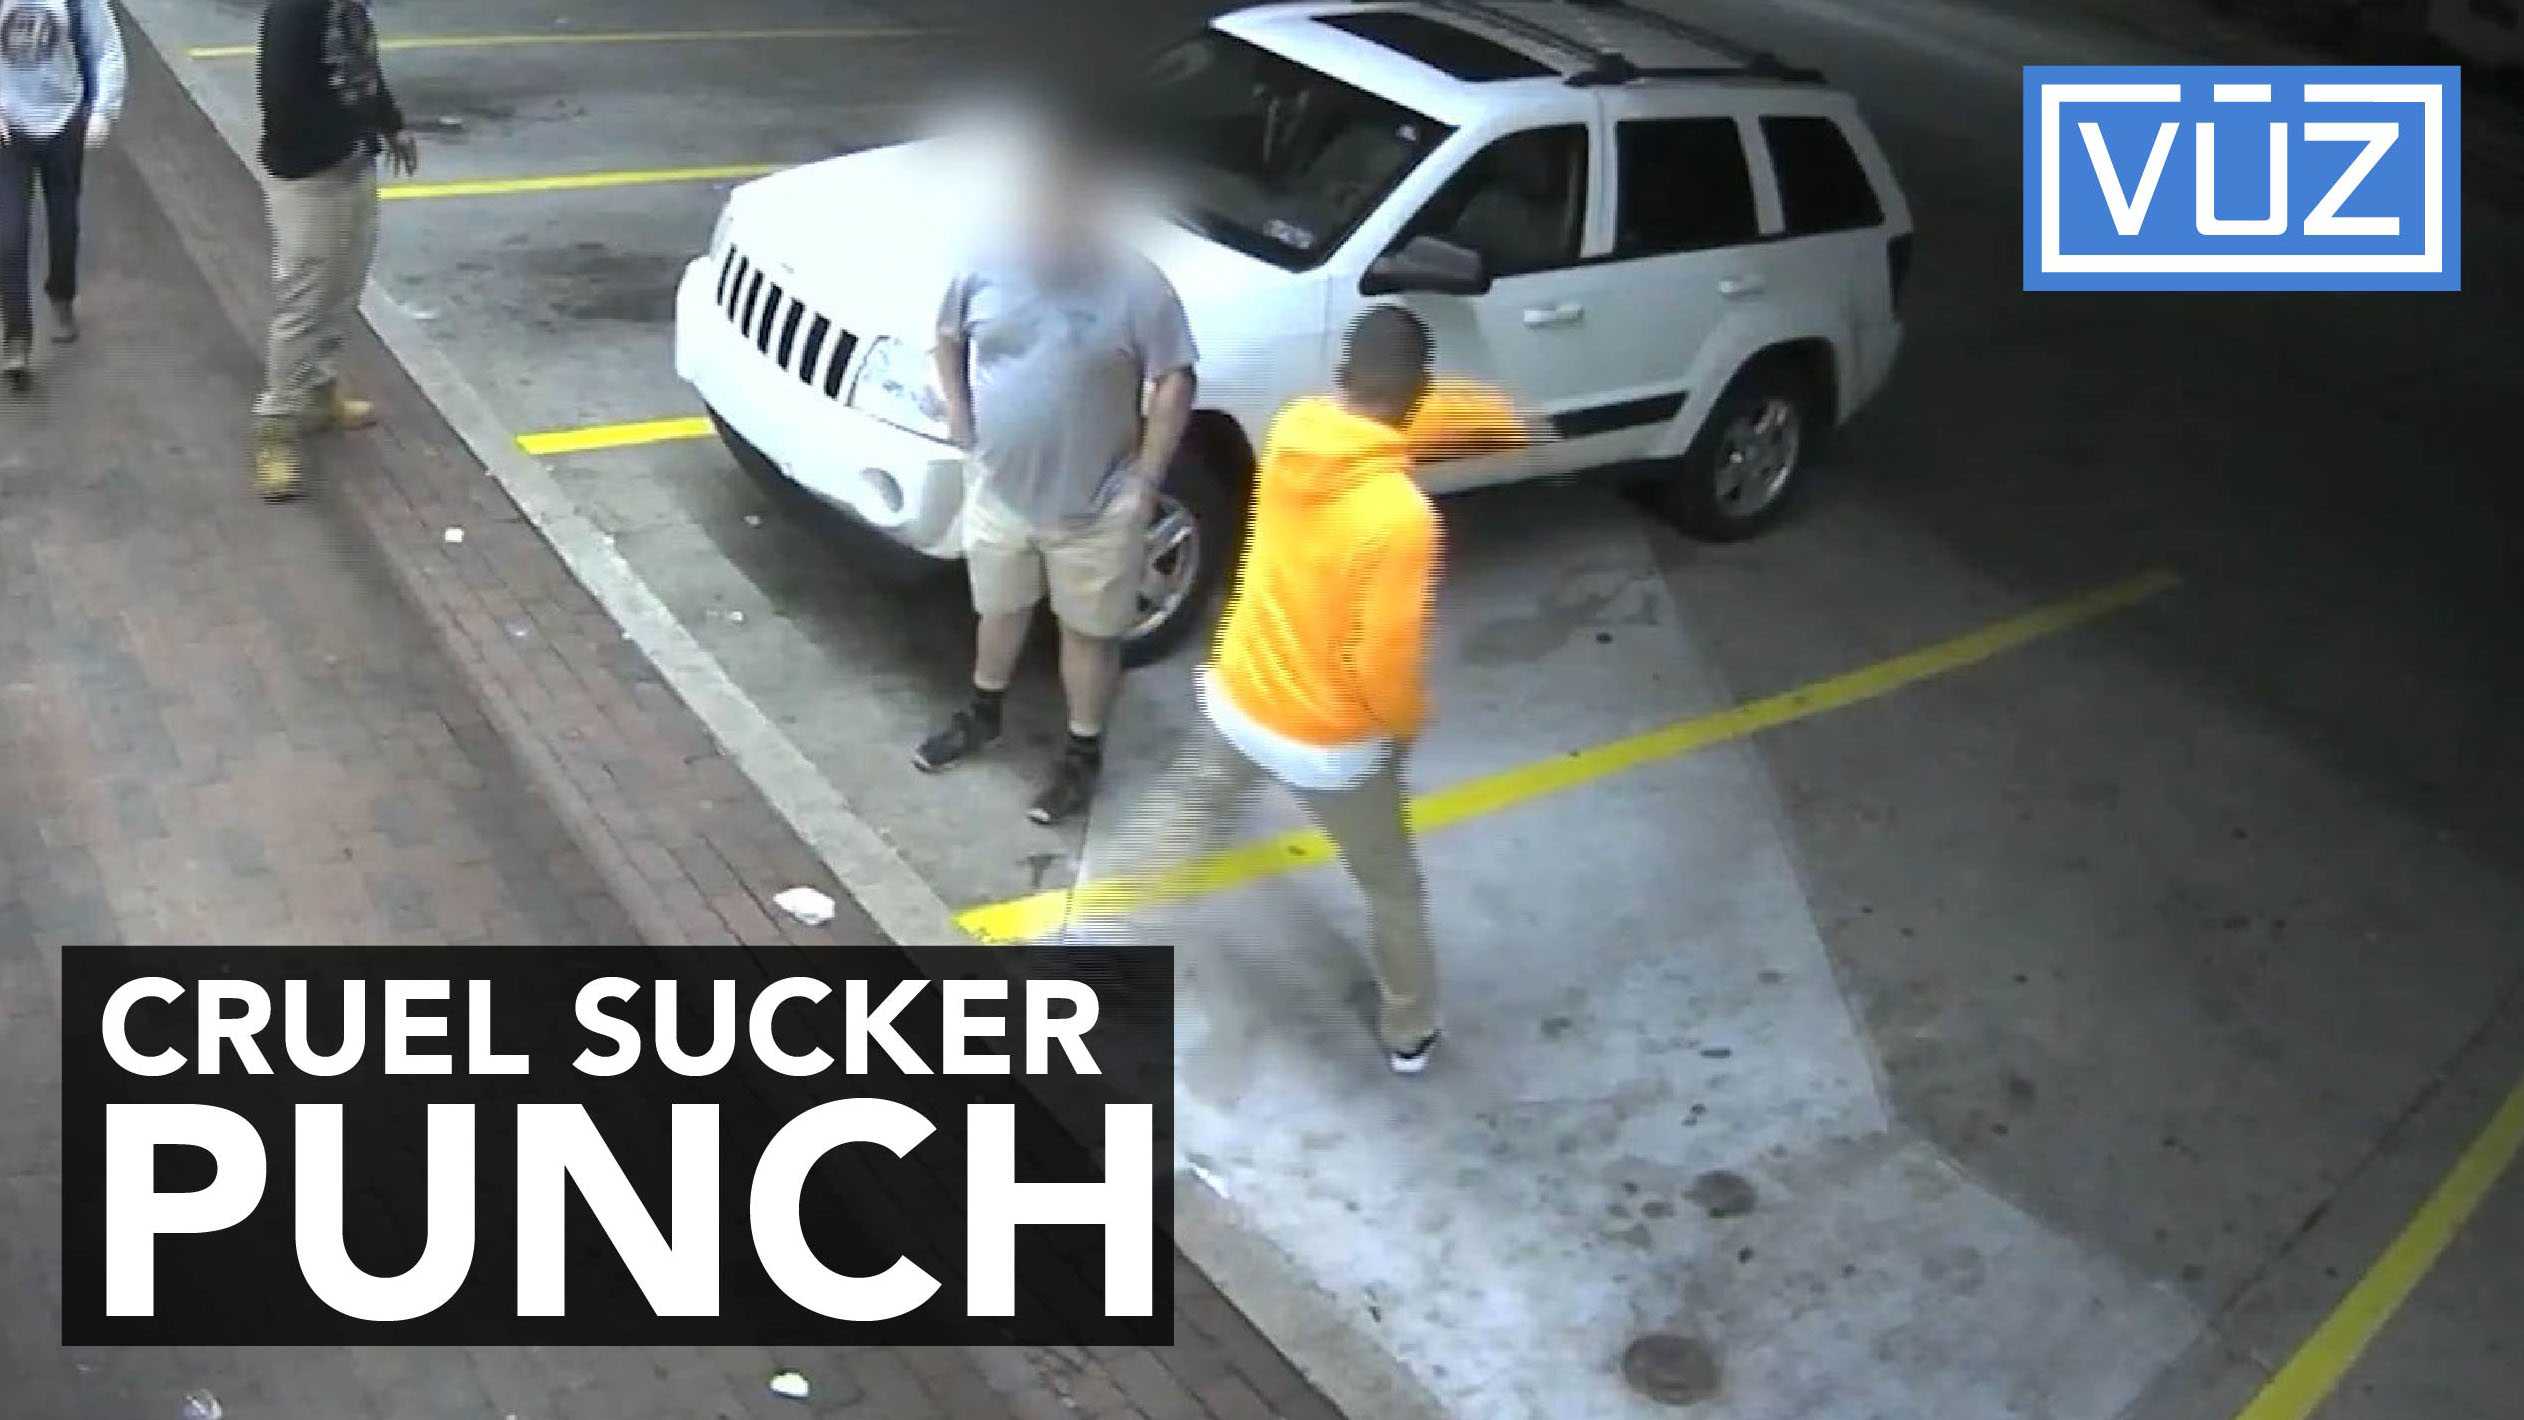 On camera: Man mocks, throws sucker-punch at man with cerebral palsy